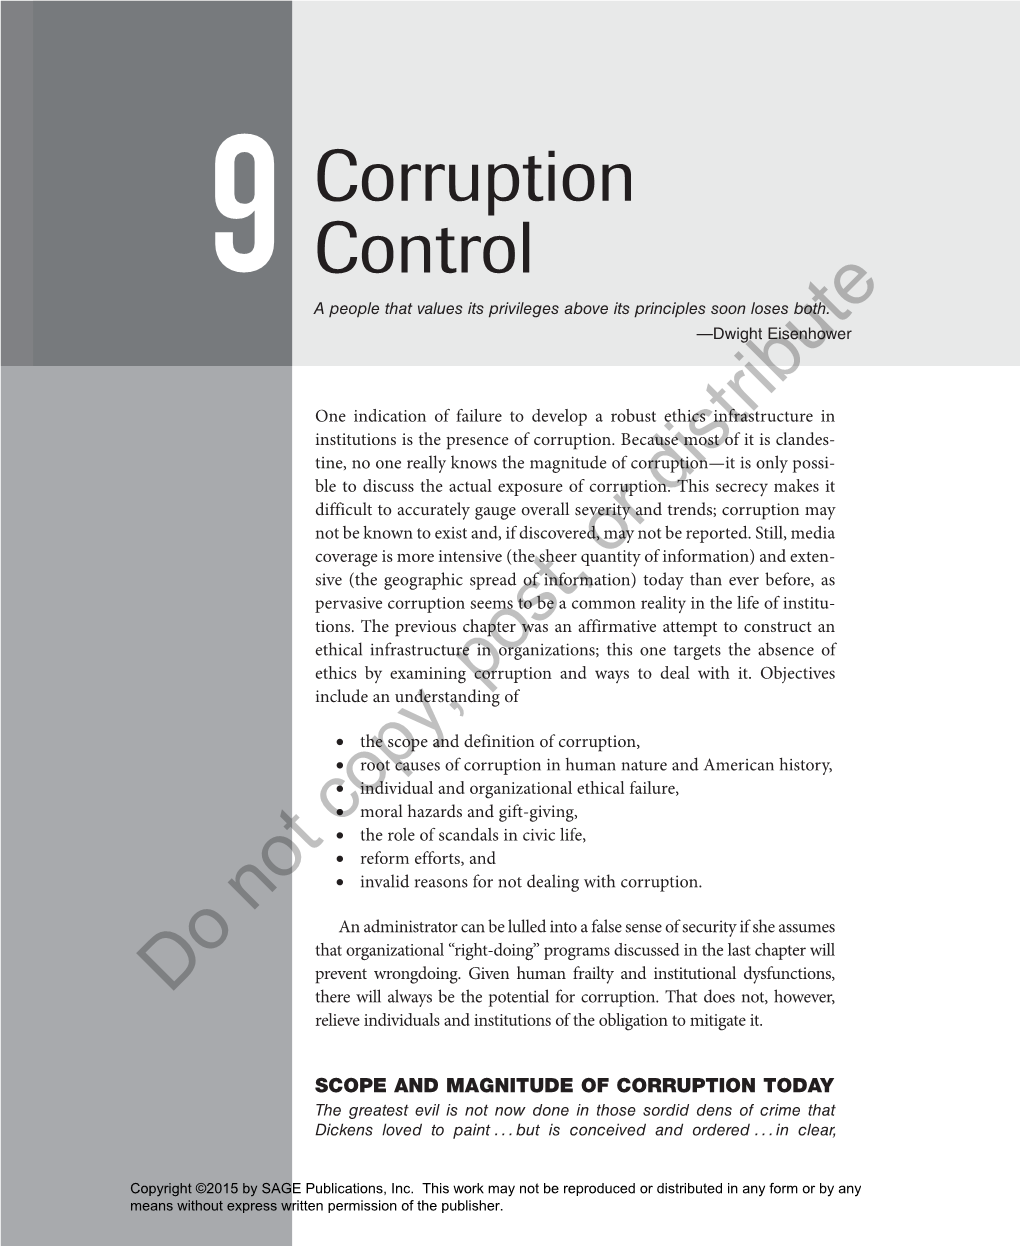 9Corruption Control